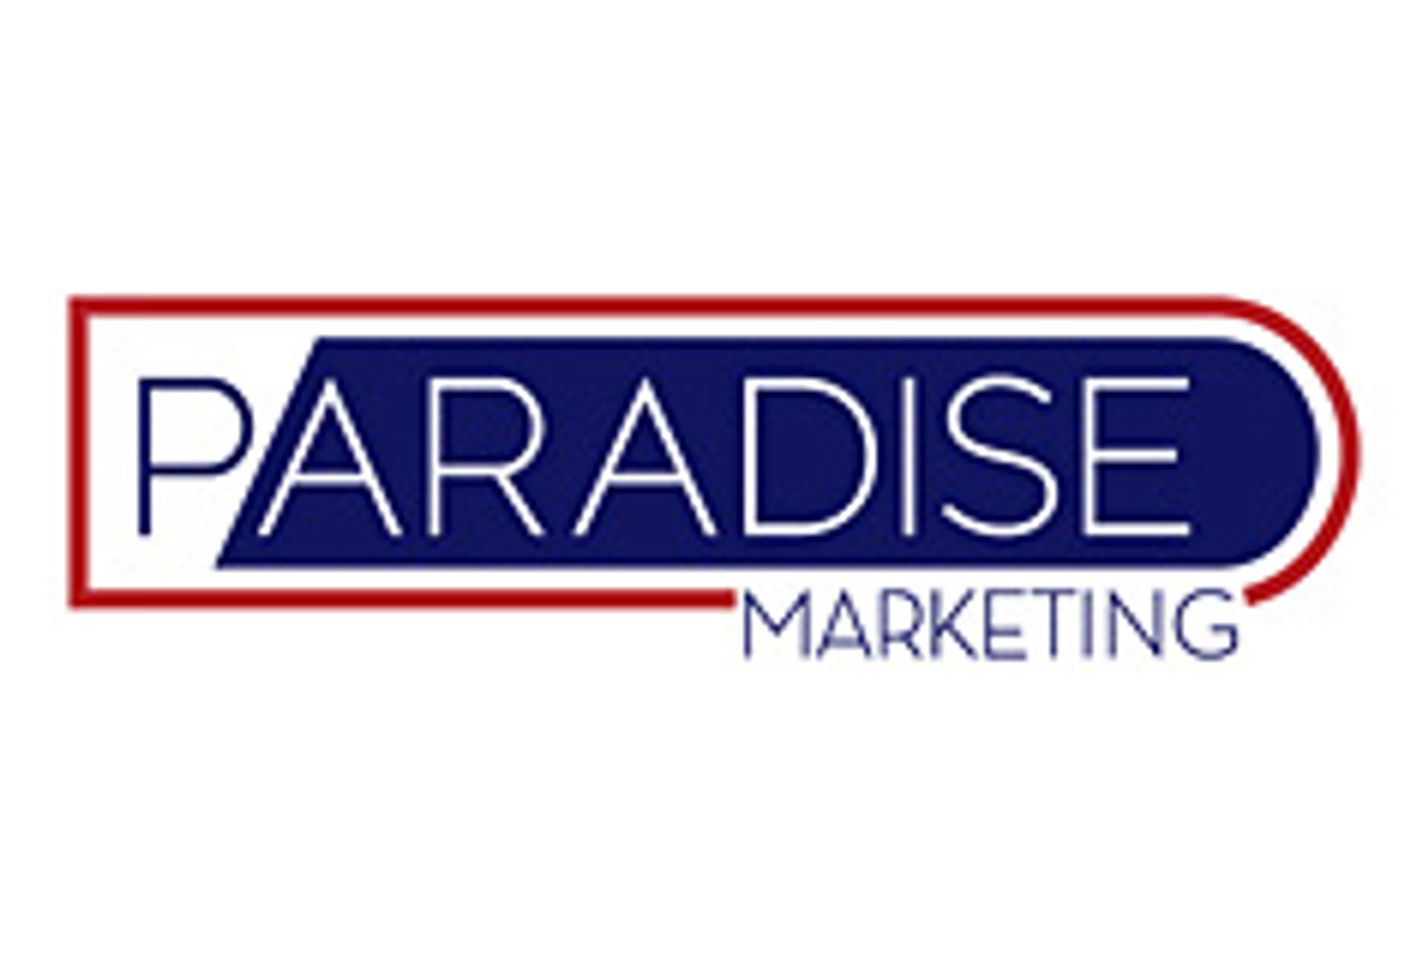 Trojan Tri-Phoria From Paradise Marketing Lands 3 Prestigious 2011 “O” Award Noms